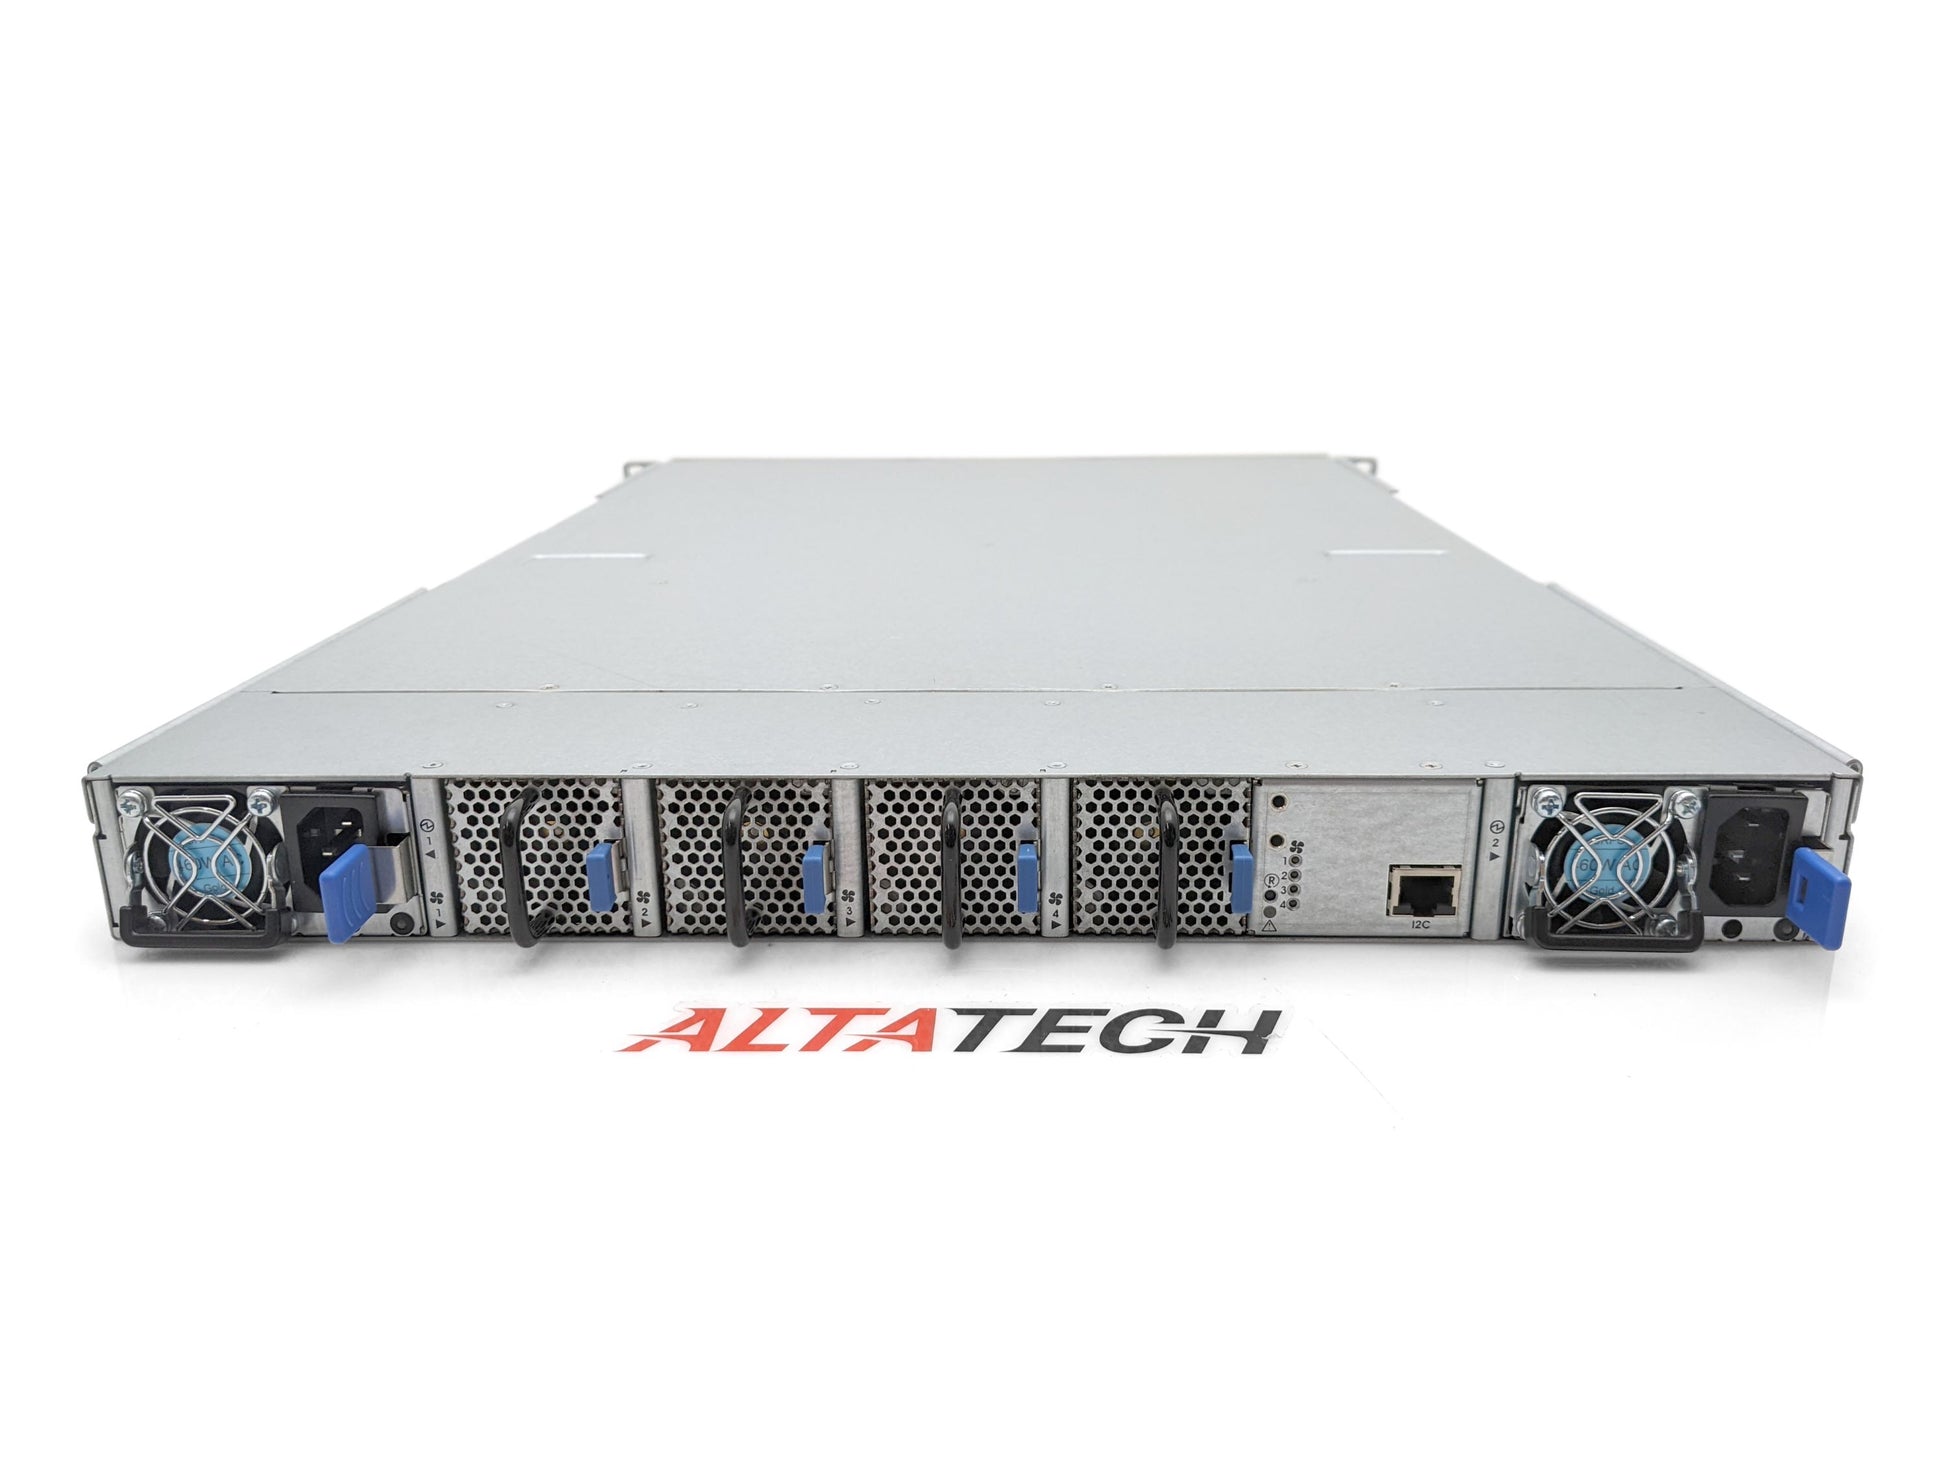 NVIDIA MSB7790-ES2F Mellanox Switch-IB SB7790 36x QSFP28 100Gbps Smart Switch, Used